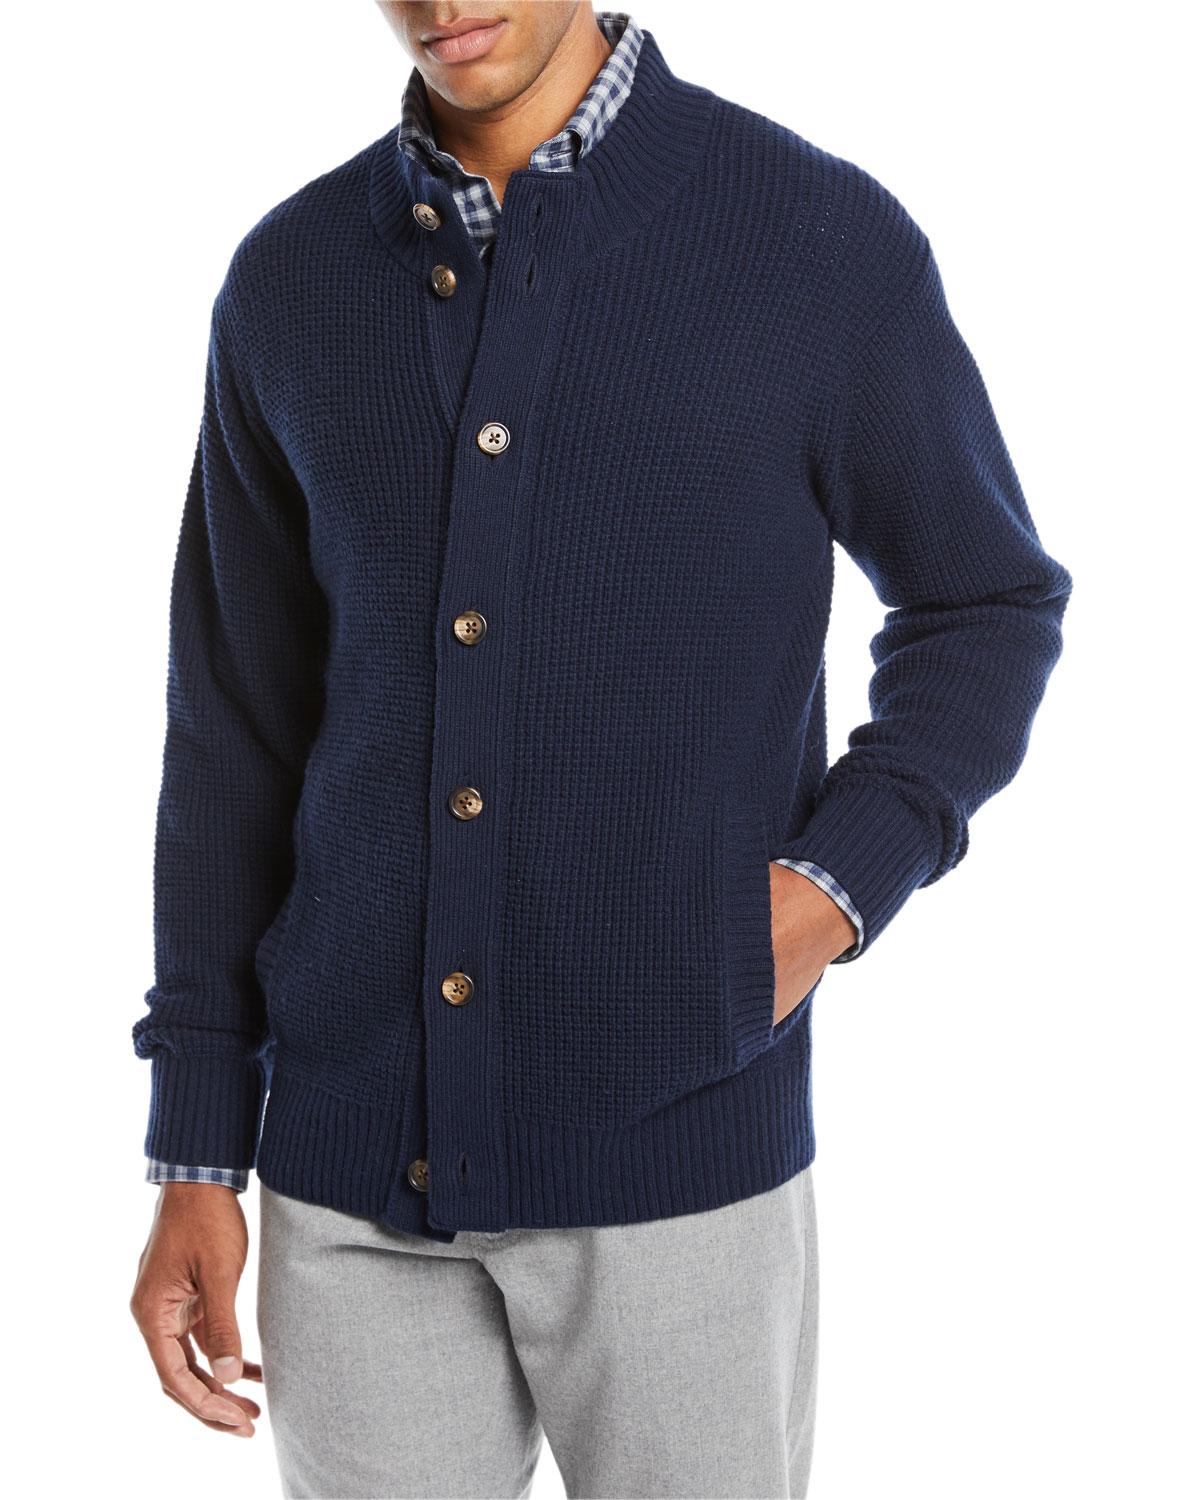 Lyst - Peter Millar Men's Button-front Wool-blend Cardigan in Blue for Men